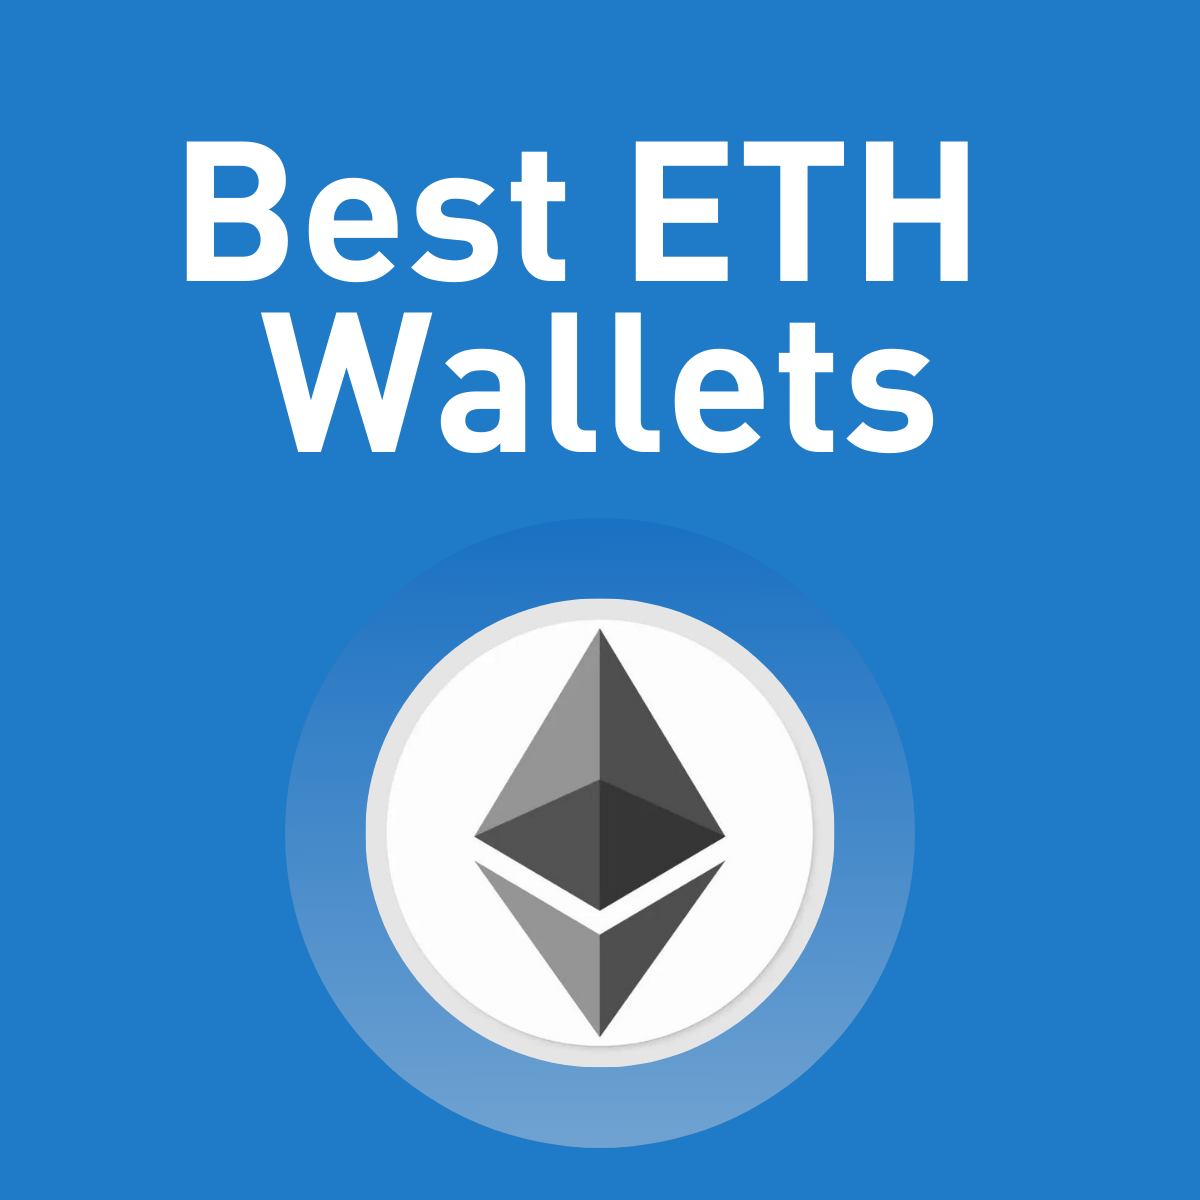 Best ethereum wallet for mining обмен валют на парке культуры